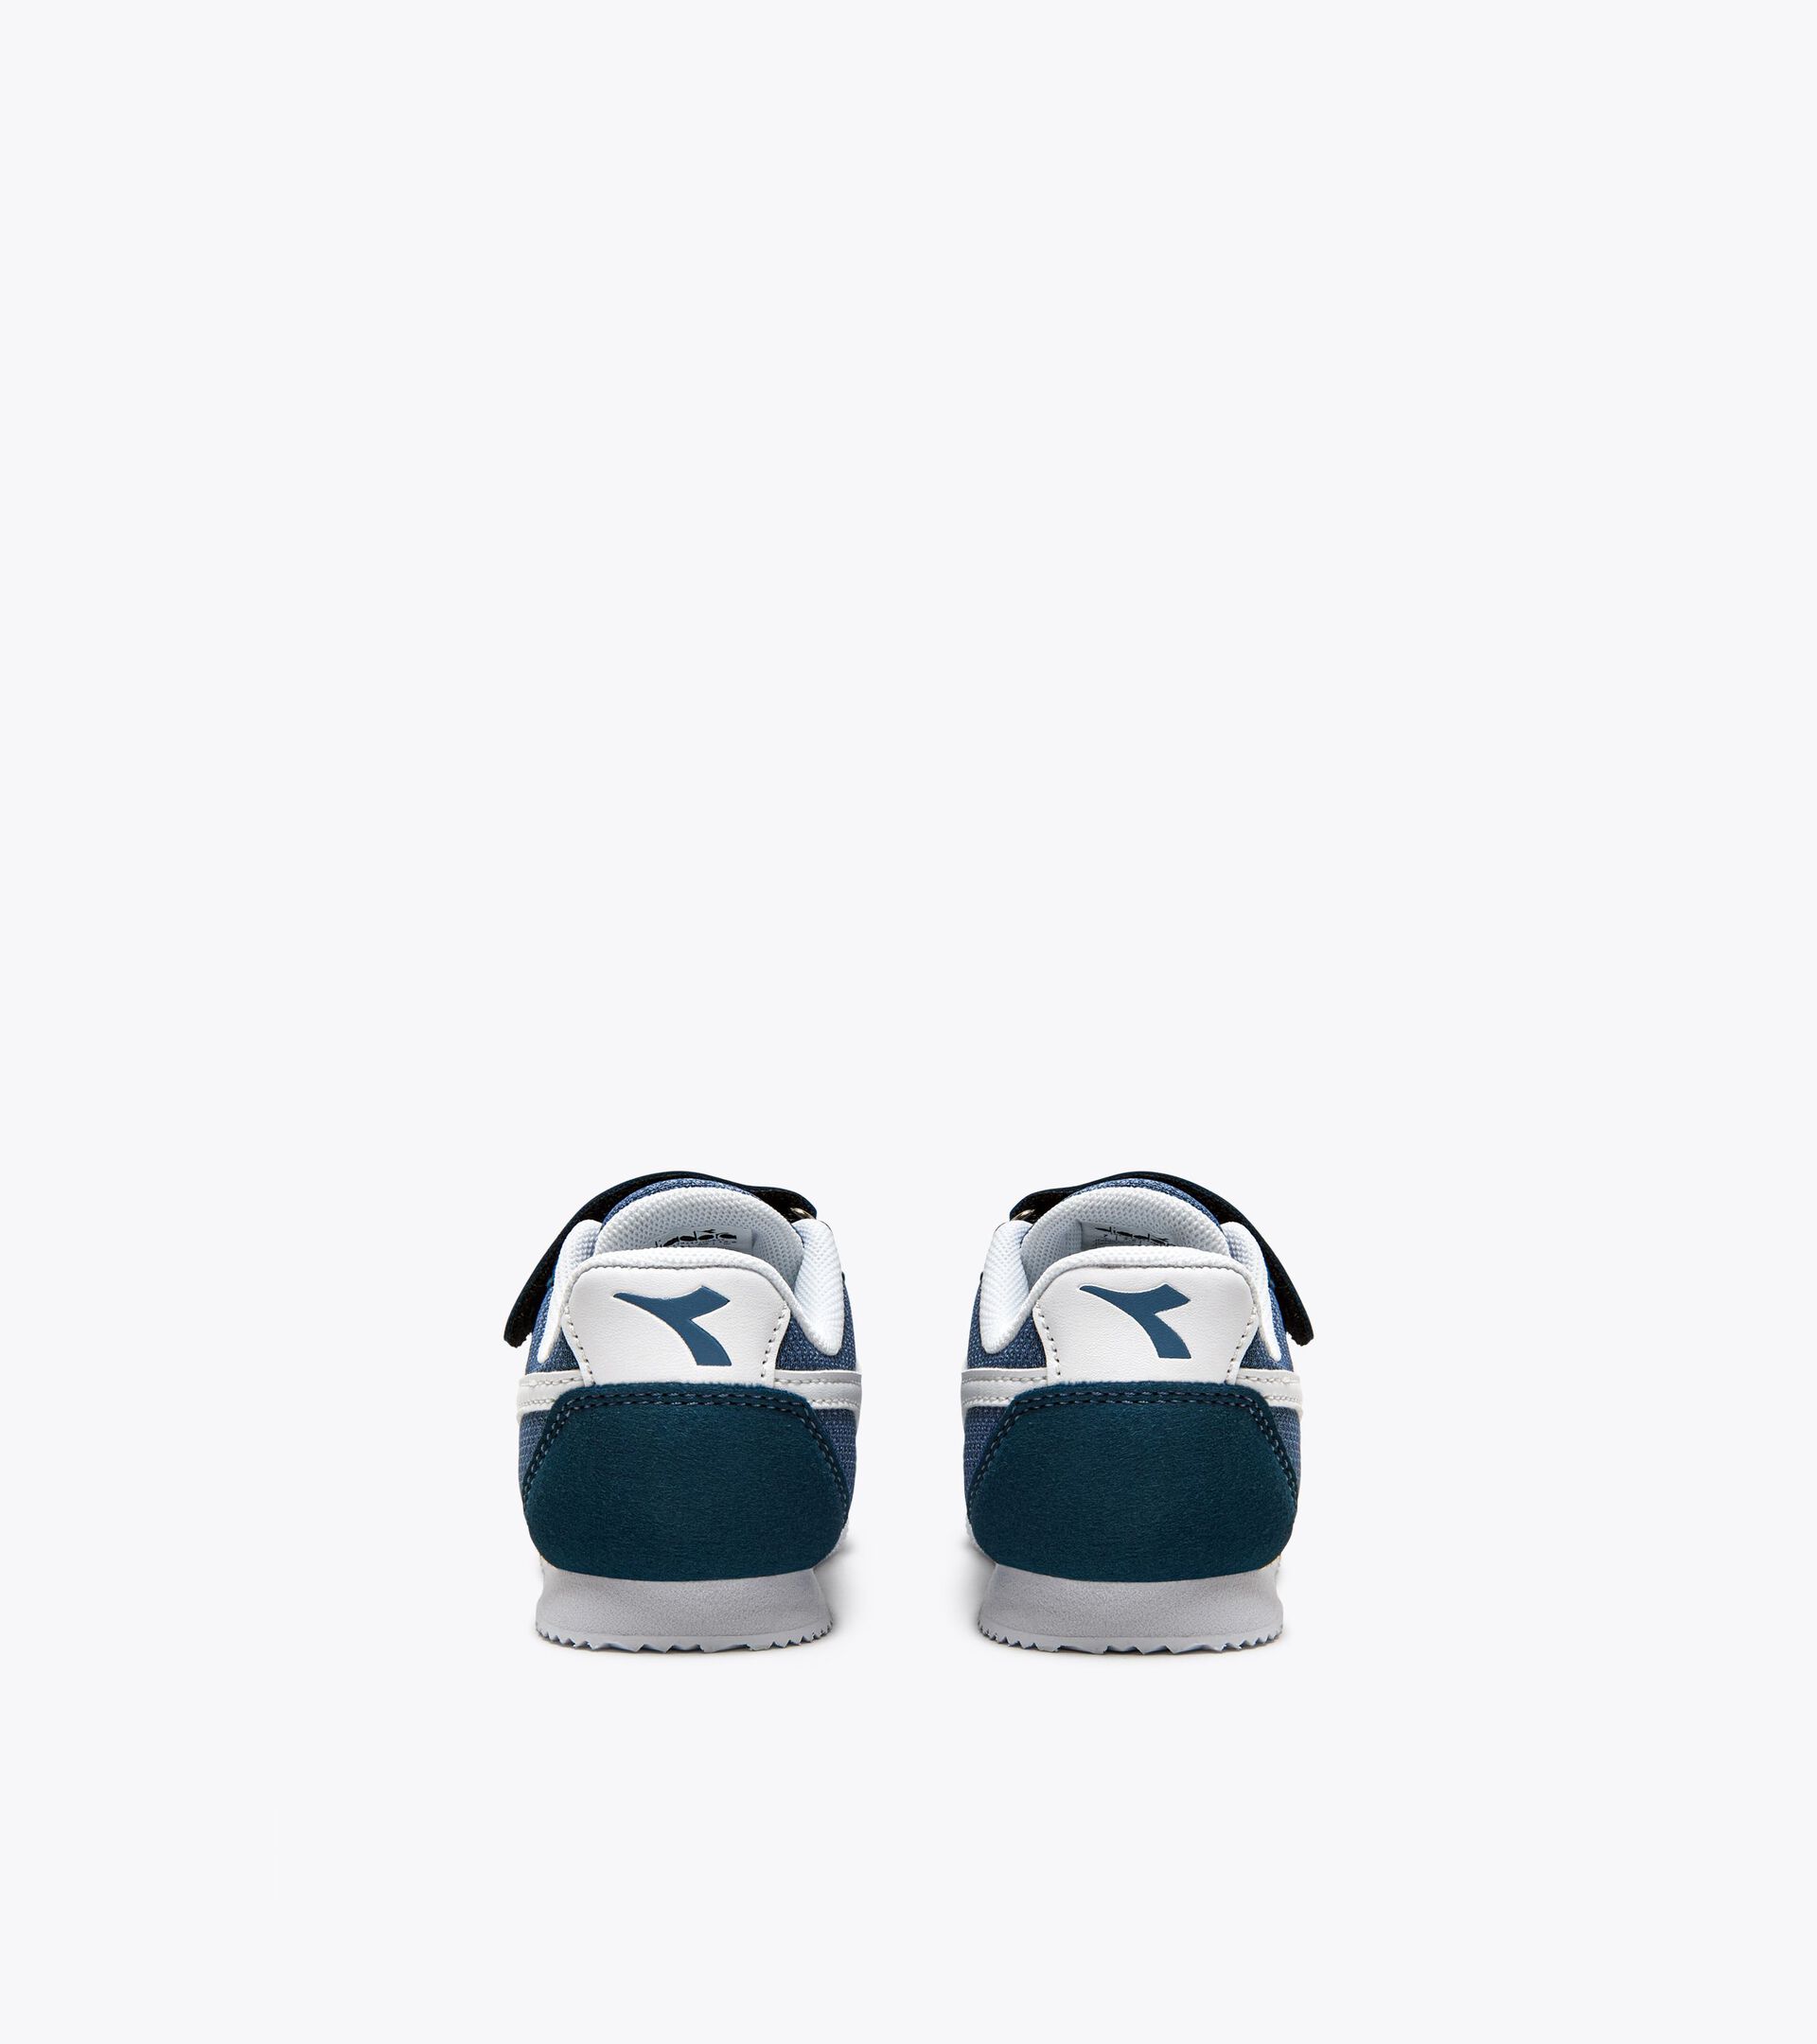 Sports shoes - Toddlers 1-4 years
 SIMPLE RUN TD LEGION BLUE/WHITE - Diadora